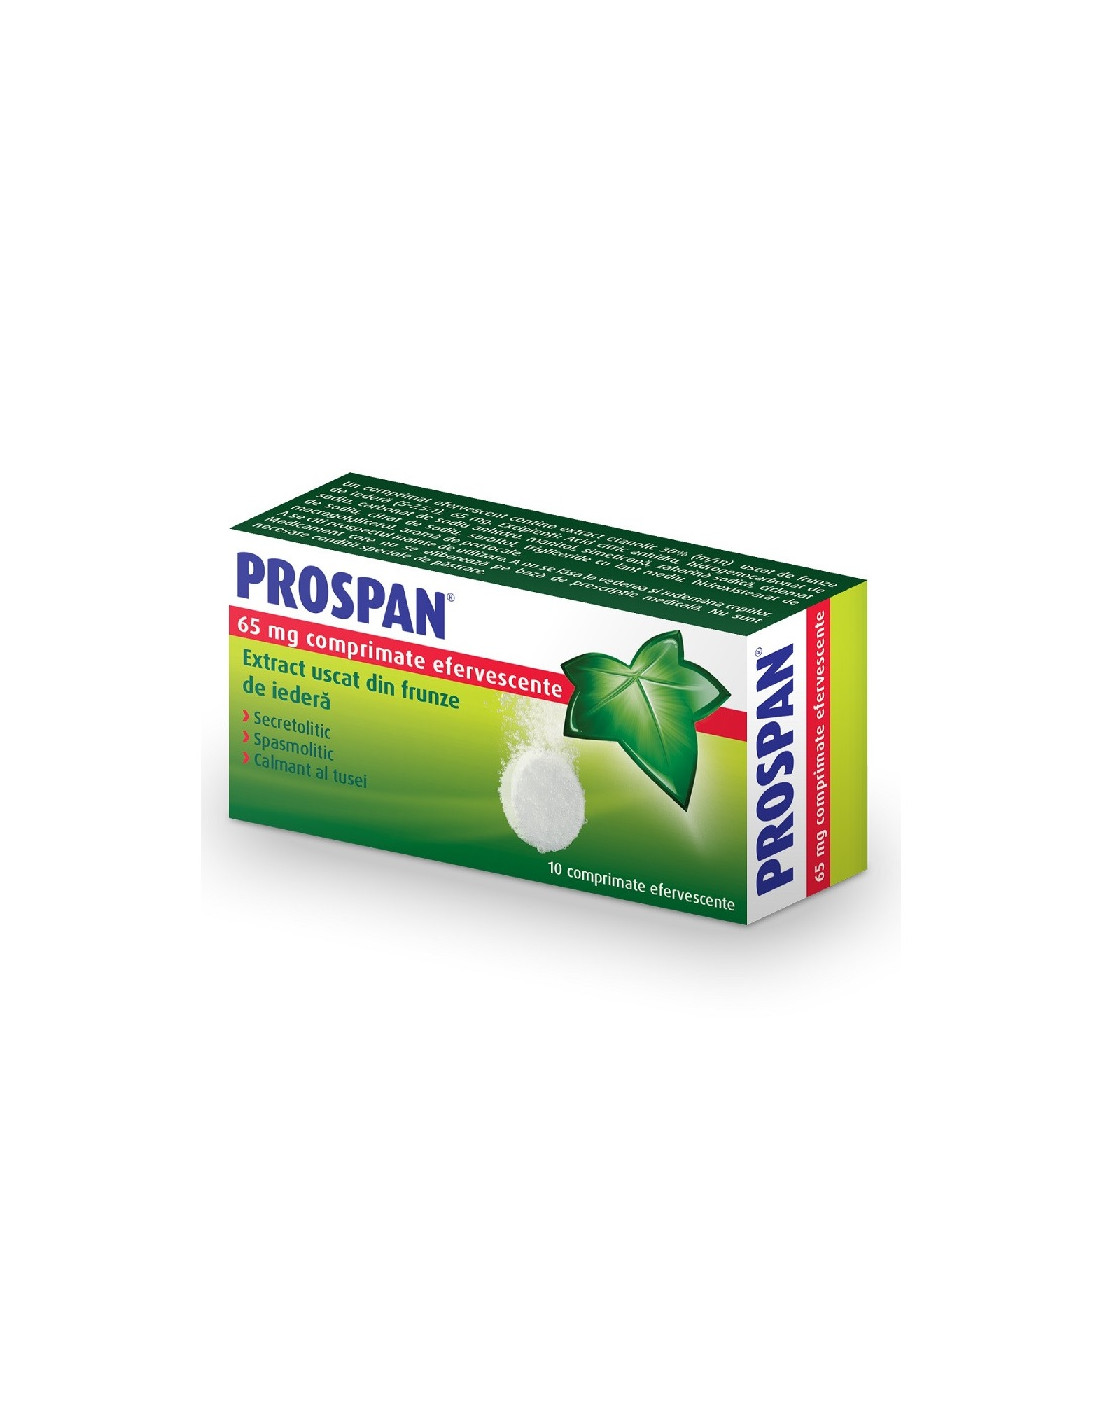 Prospan, 65 mg, 10 comprimate efervescente, Engelhard Arzneimittel